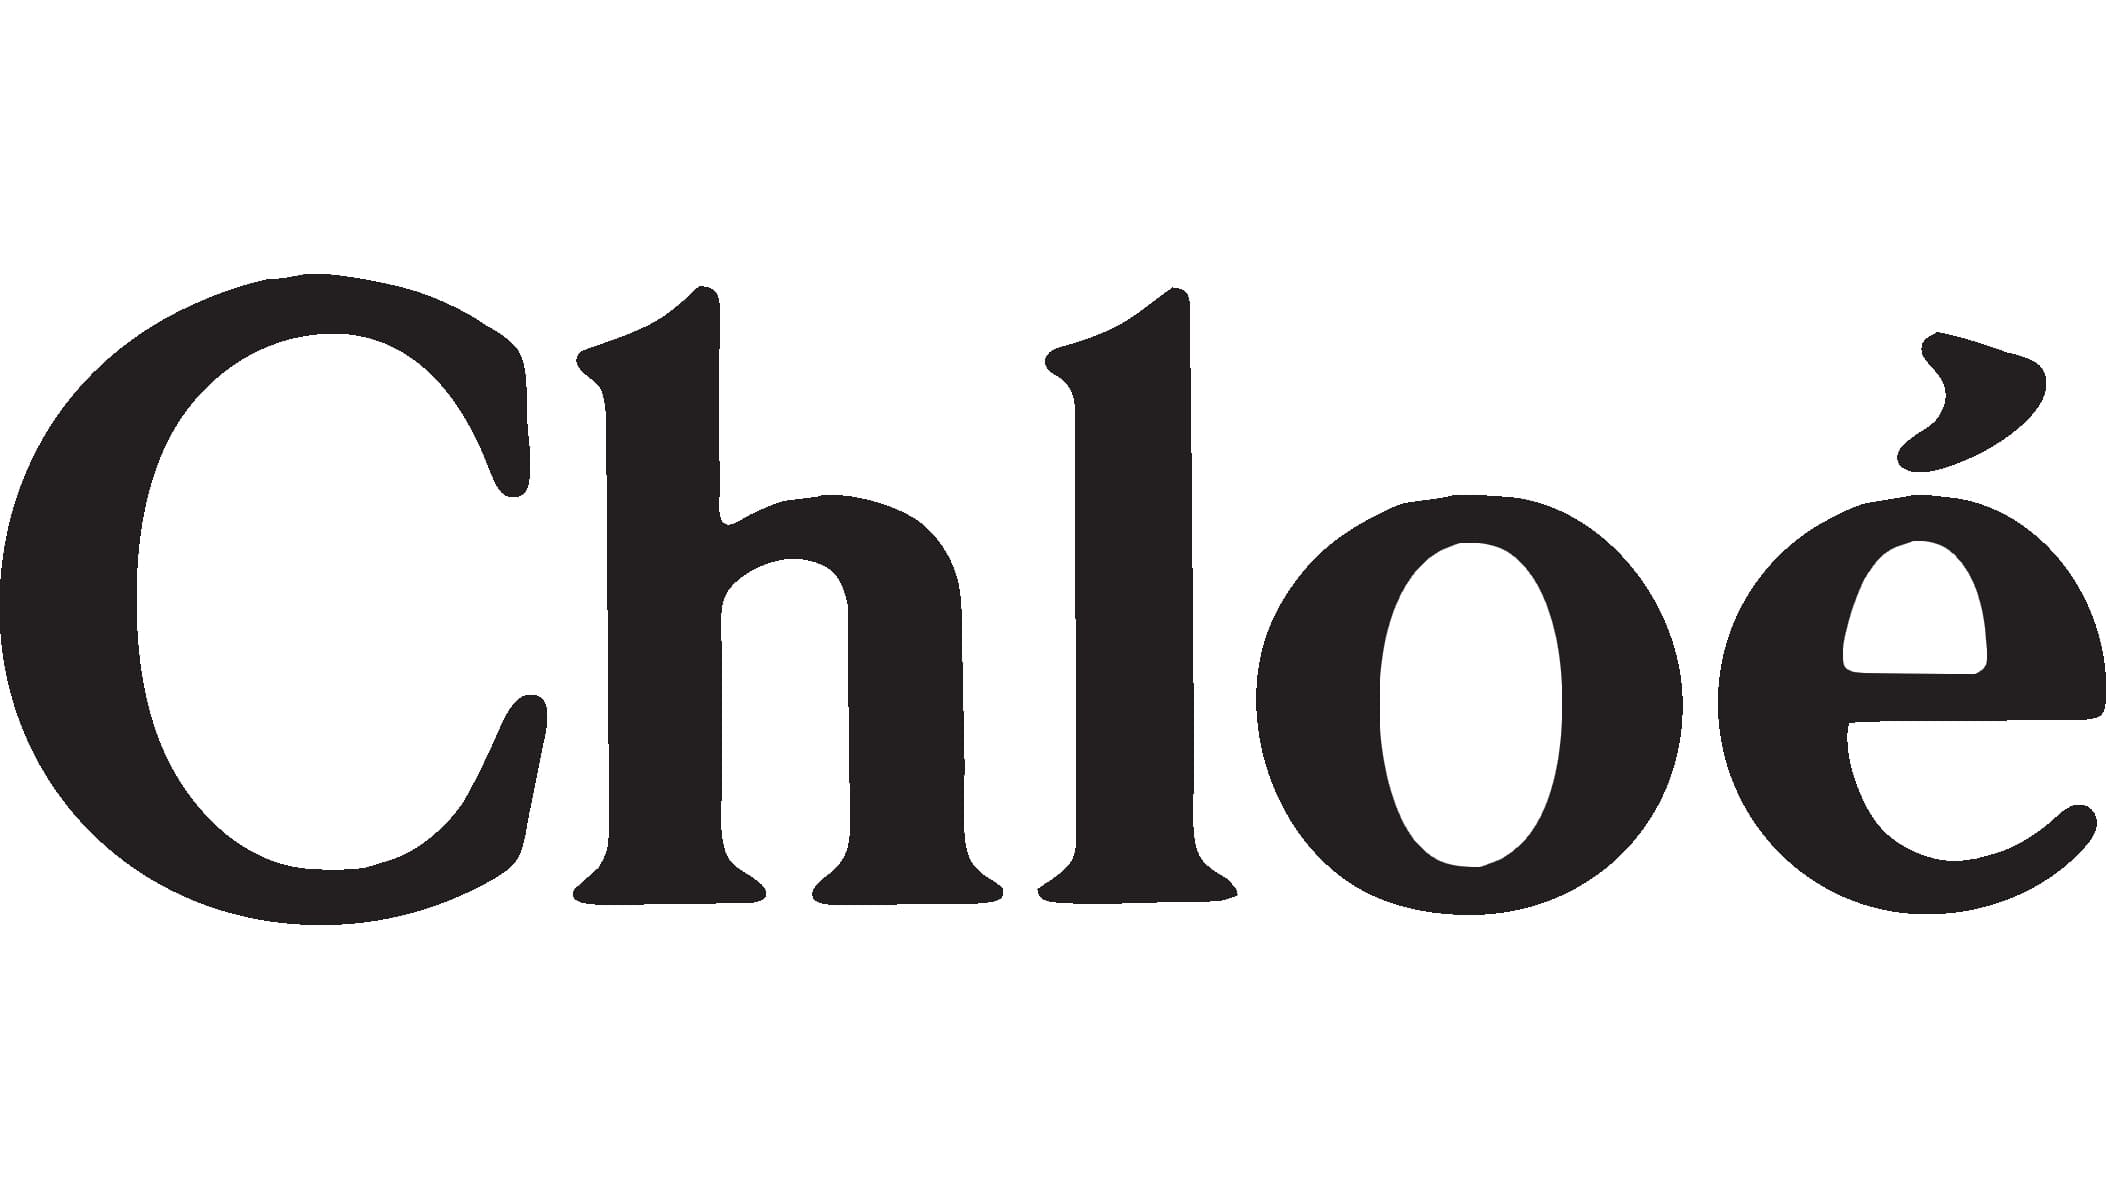 Chloe - A Classic Typeface  Logo design, Fashion branding